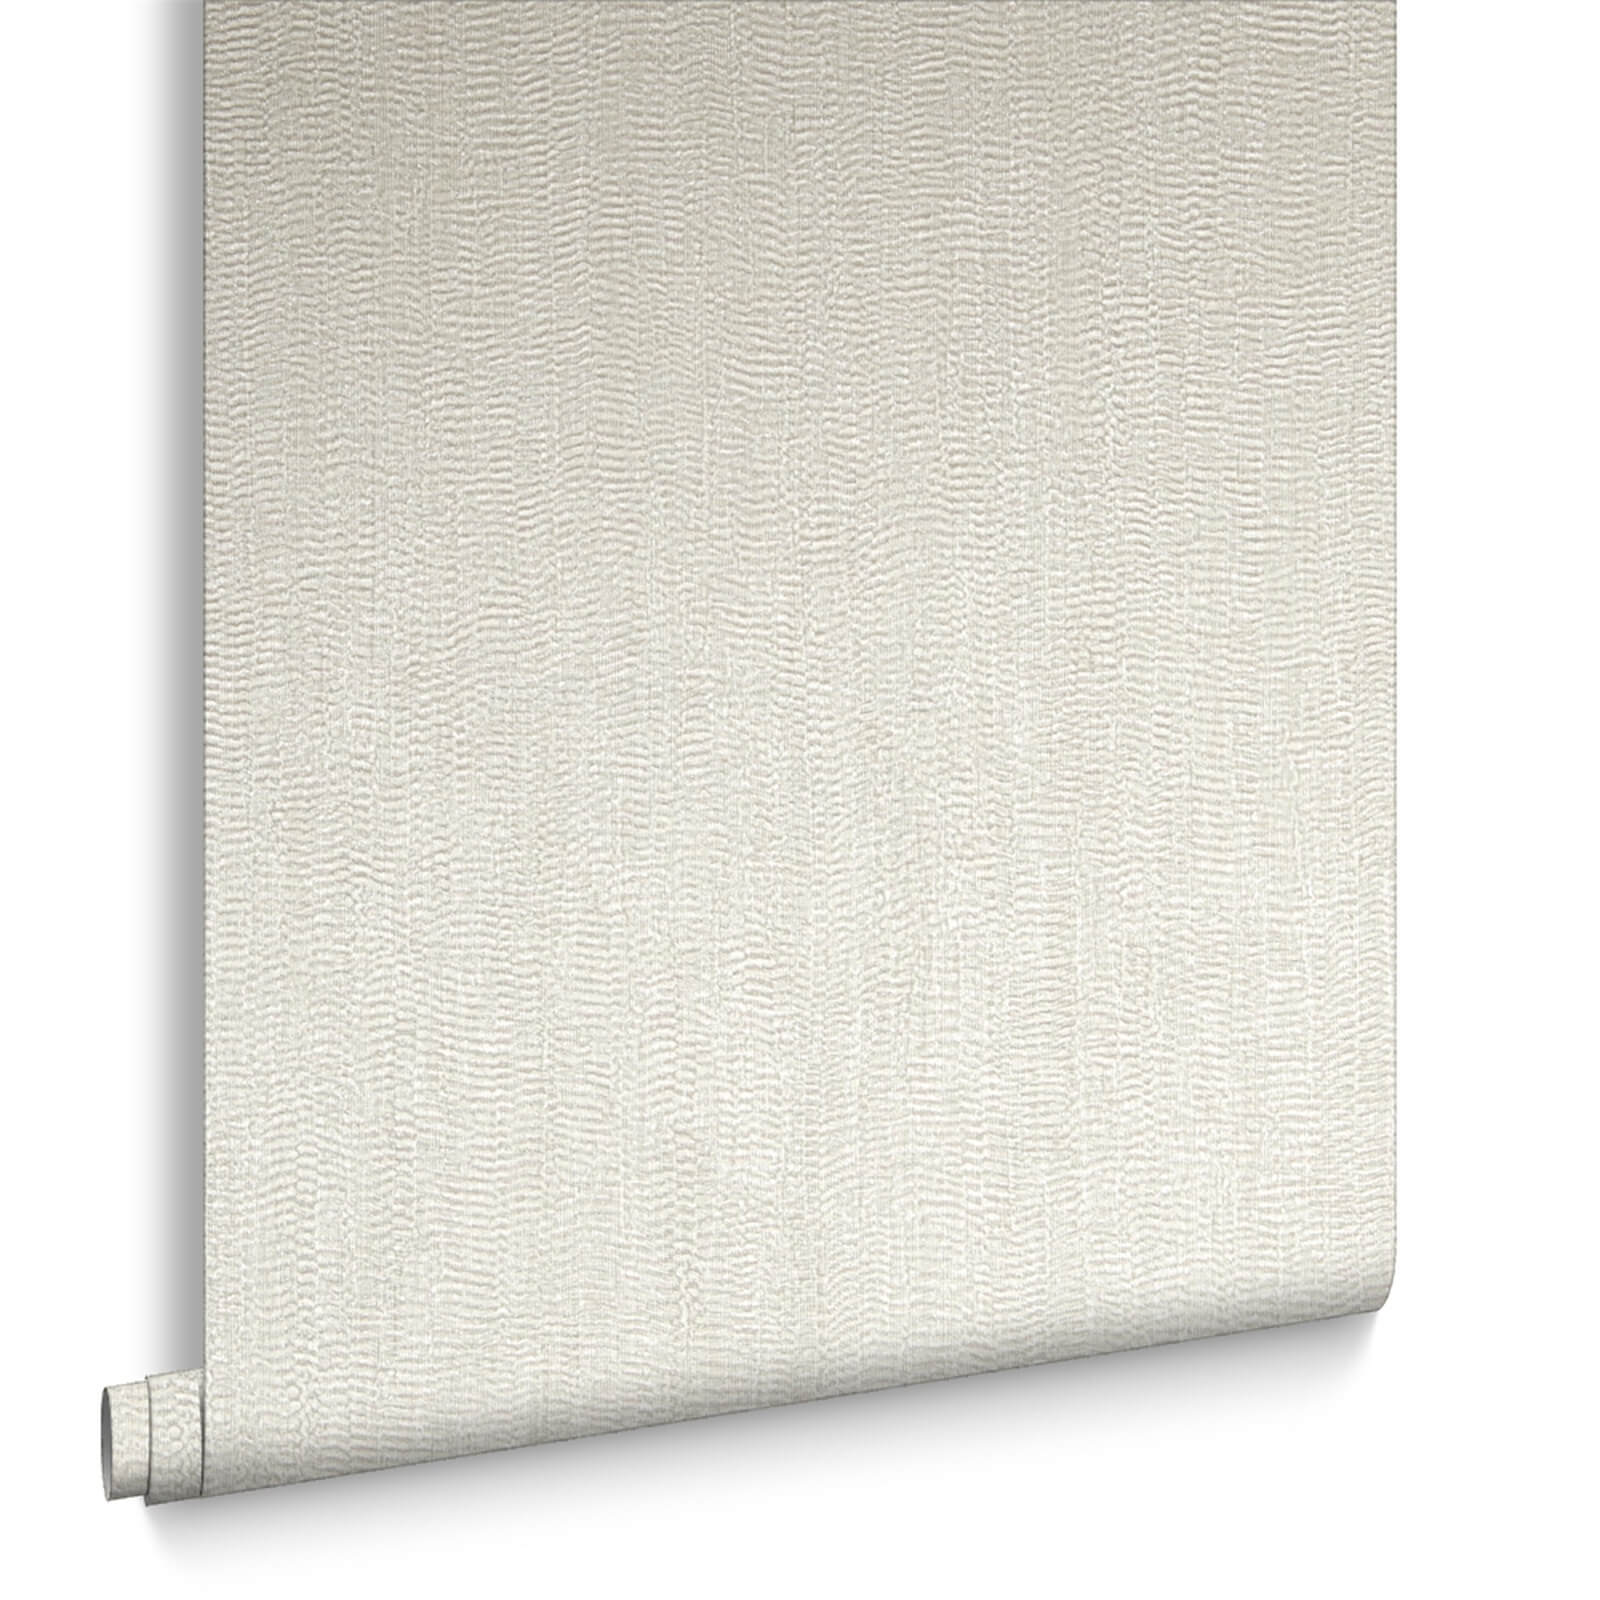 Boutique Water Silk Plain Wallpaper - Ivory